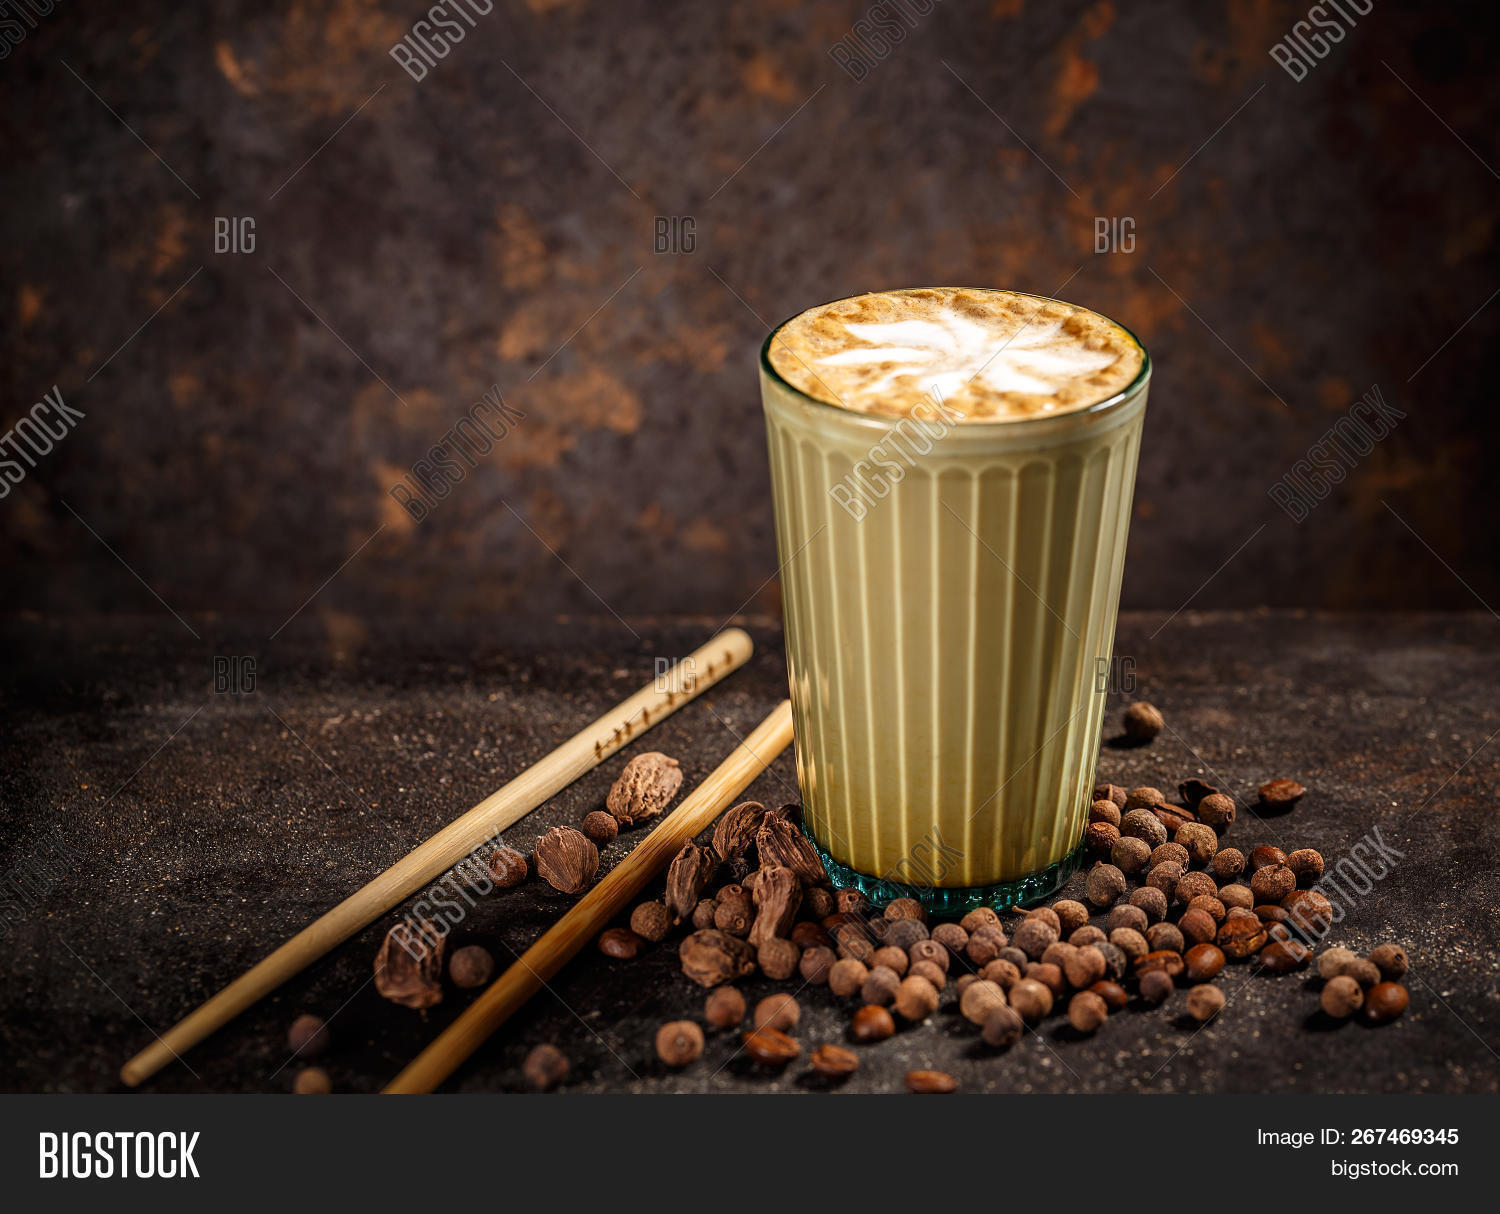 Spice Chai Latte On Image Photo Trial Bigstock